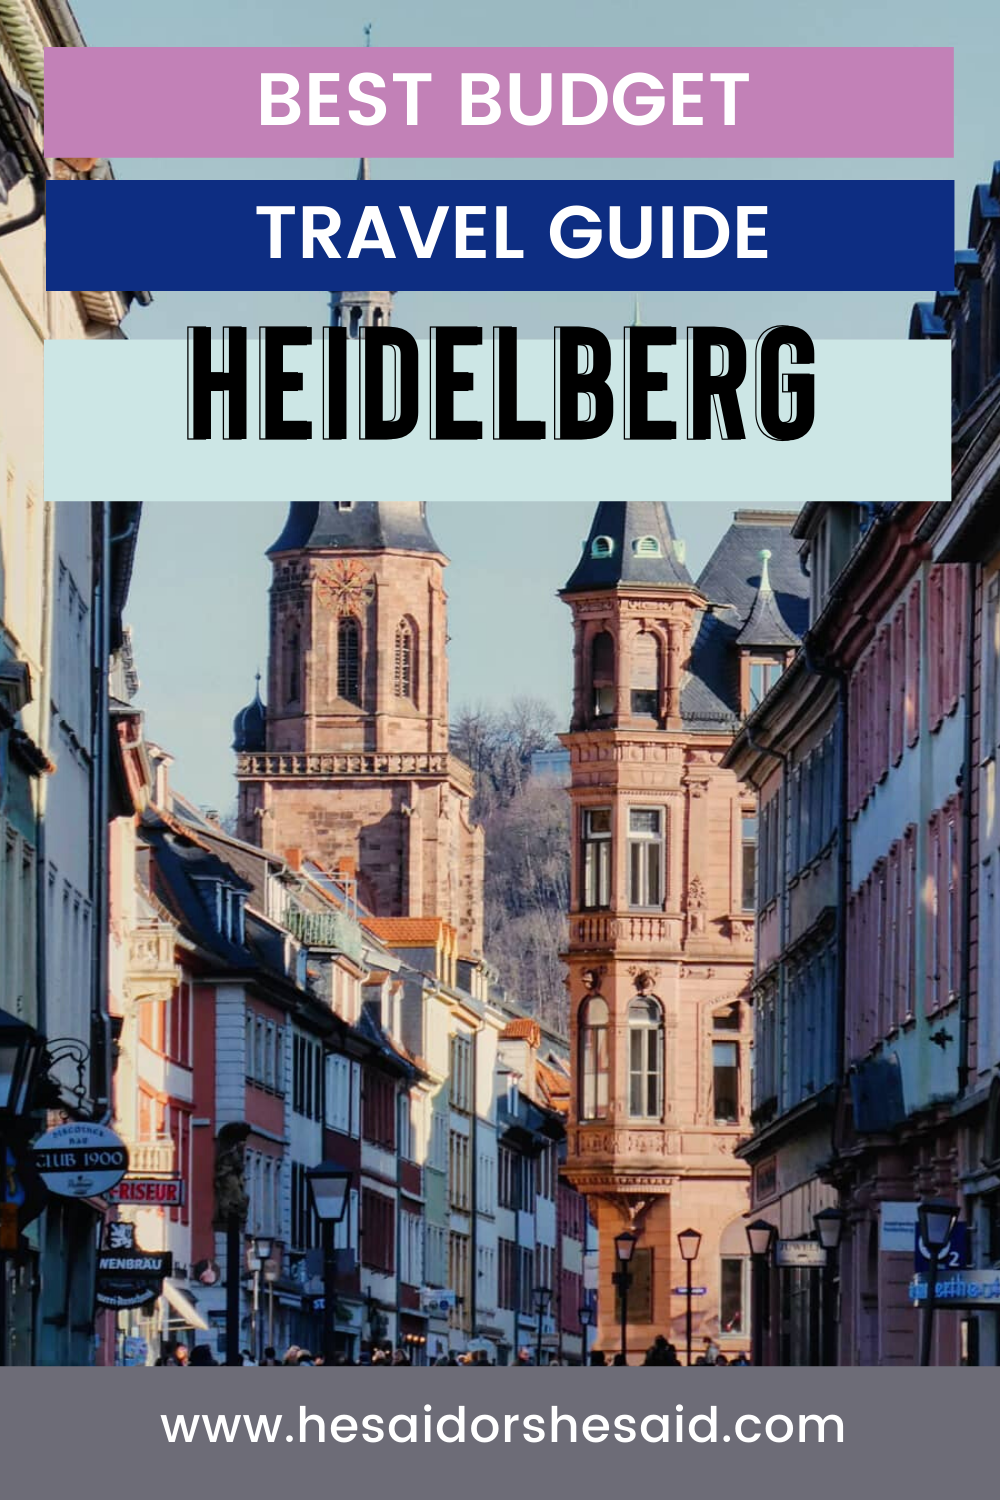 Best Budget Travel Guide Heidelberg by hesaidorshesaid